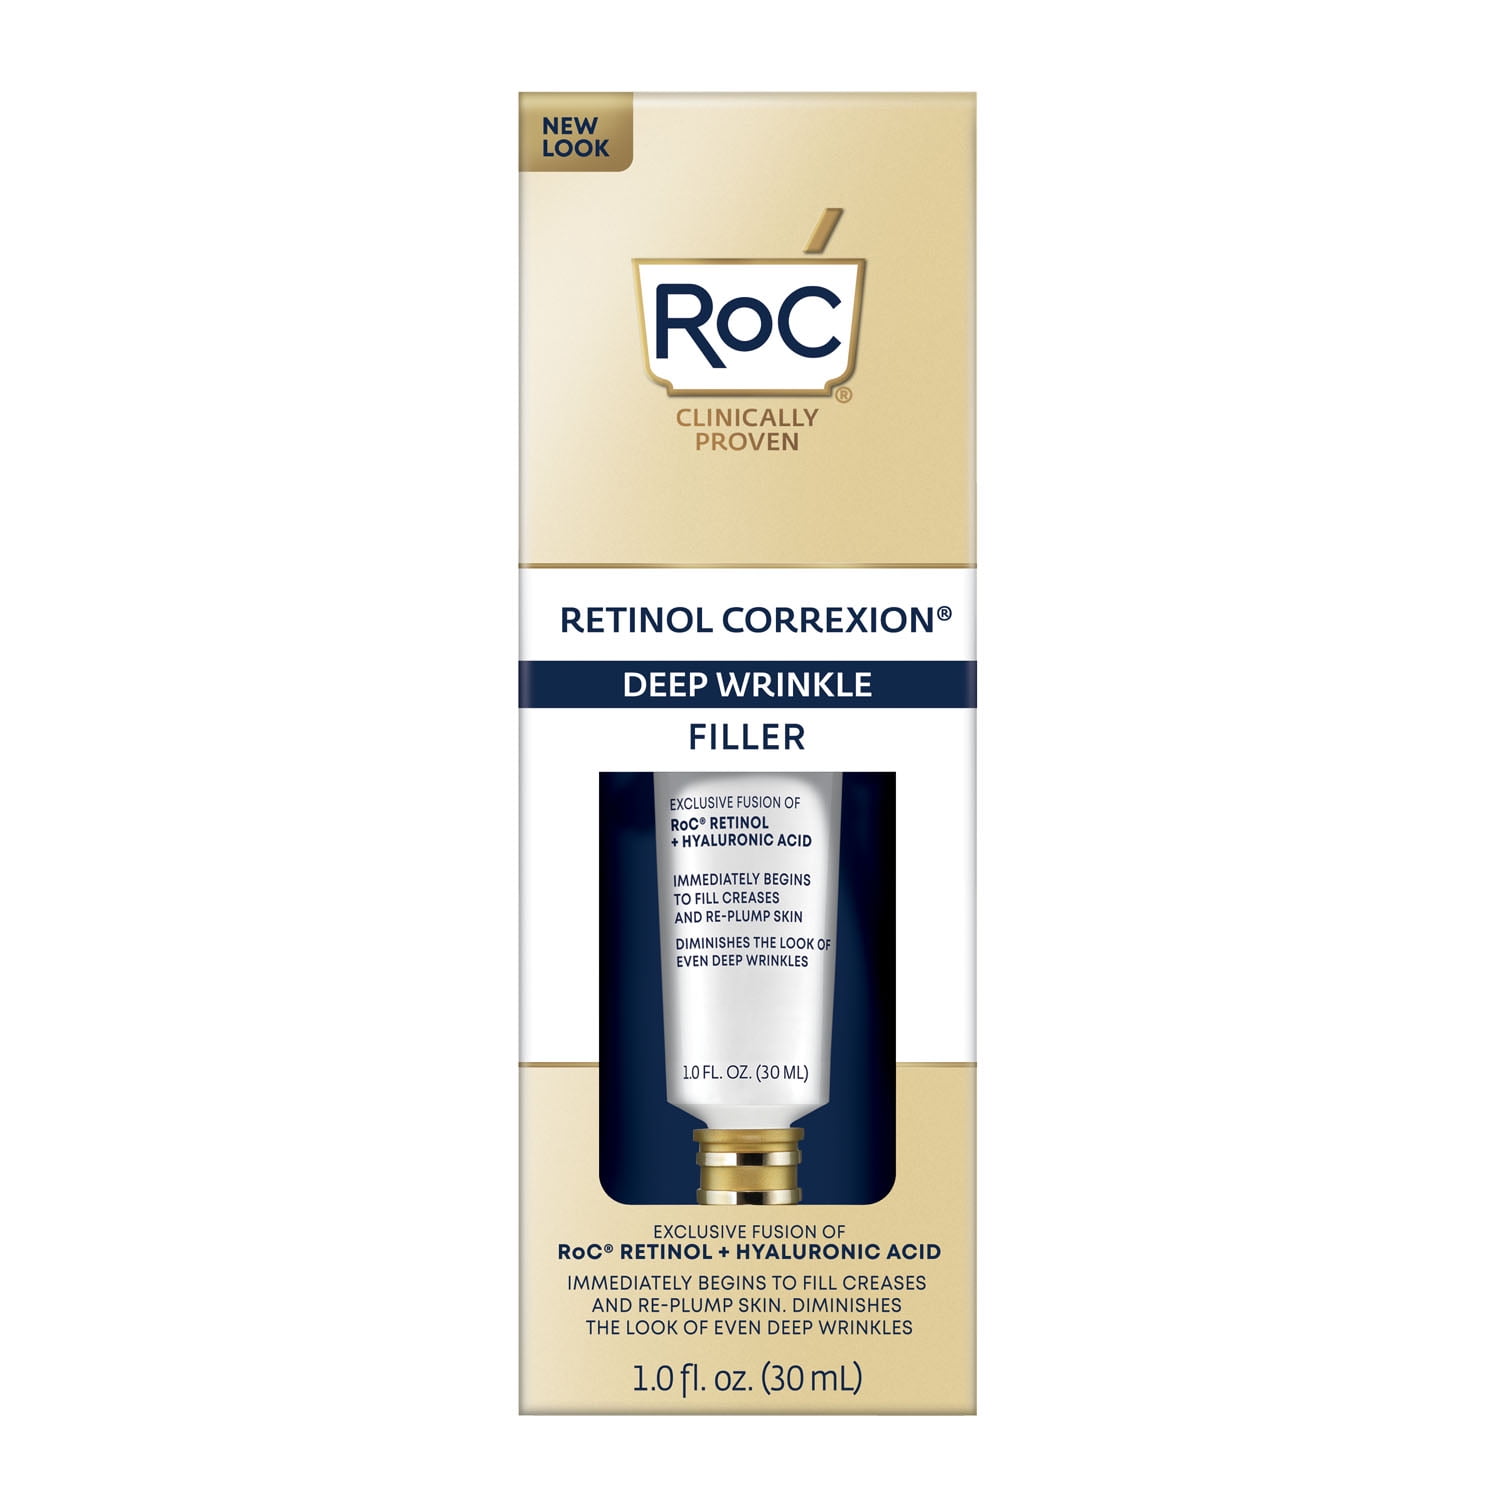 RoC Retinol Correxion Anti-Wrinkle Retinol Serum with Hyaluronic Acid, Firming Treatment, 1 oz